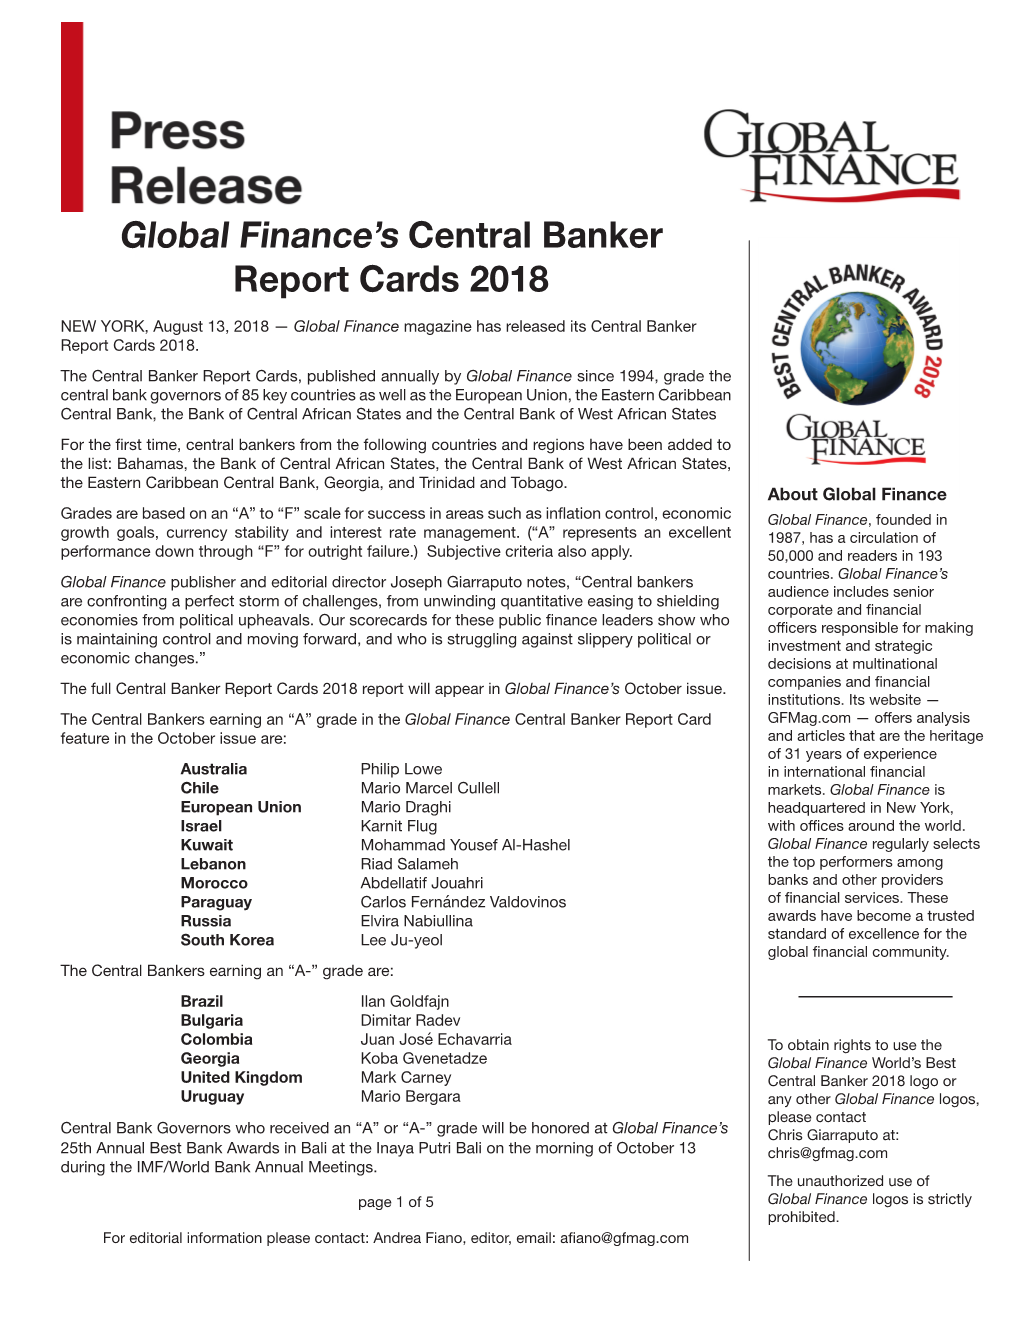 Global Finance's Central Banker Report Cards 2018